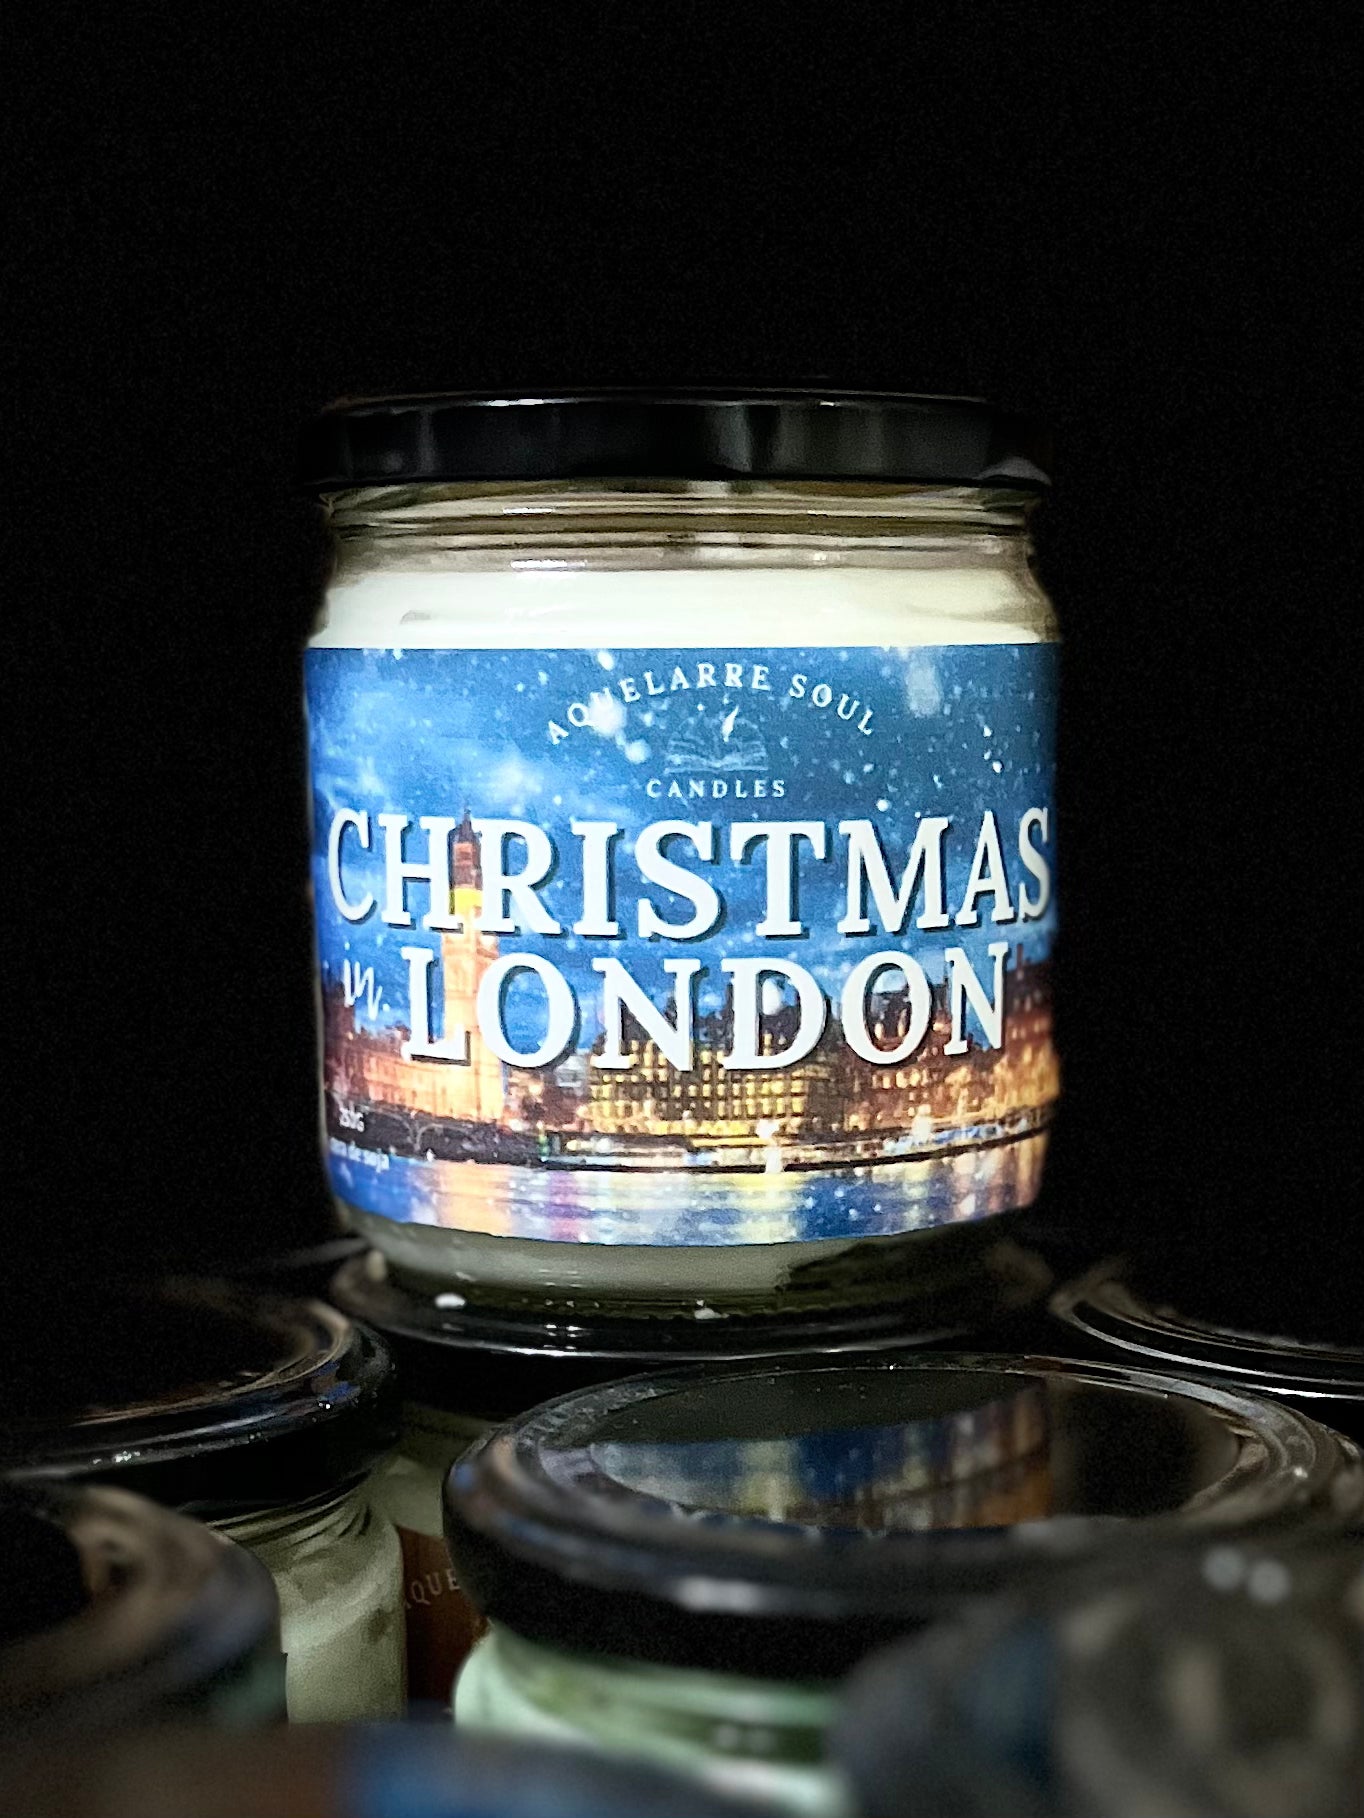 Christmas in London – Aquelarre soul